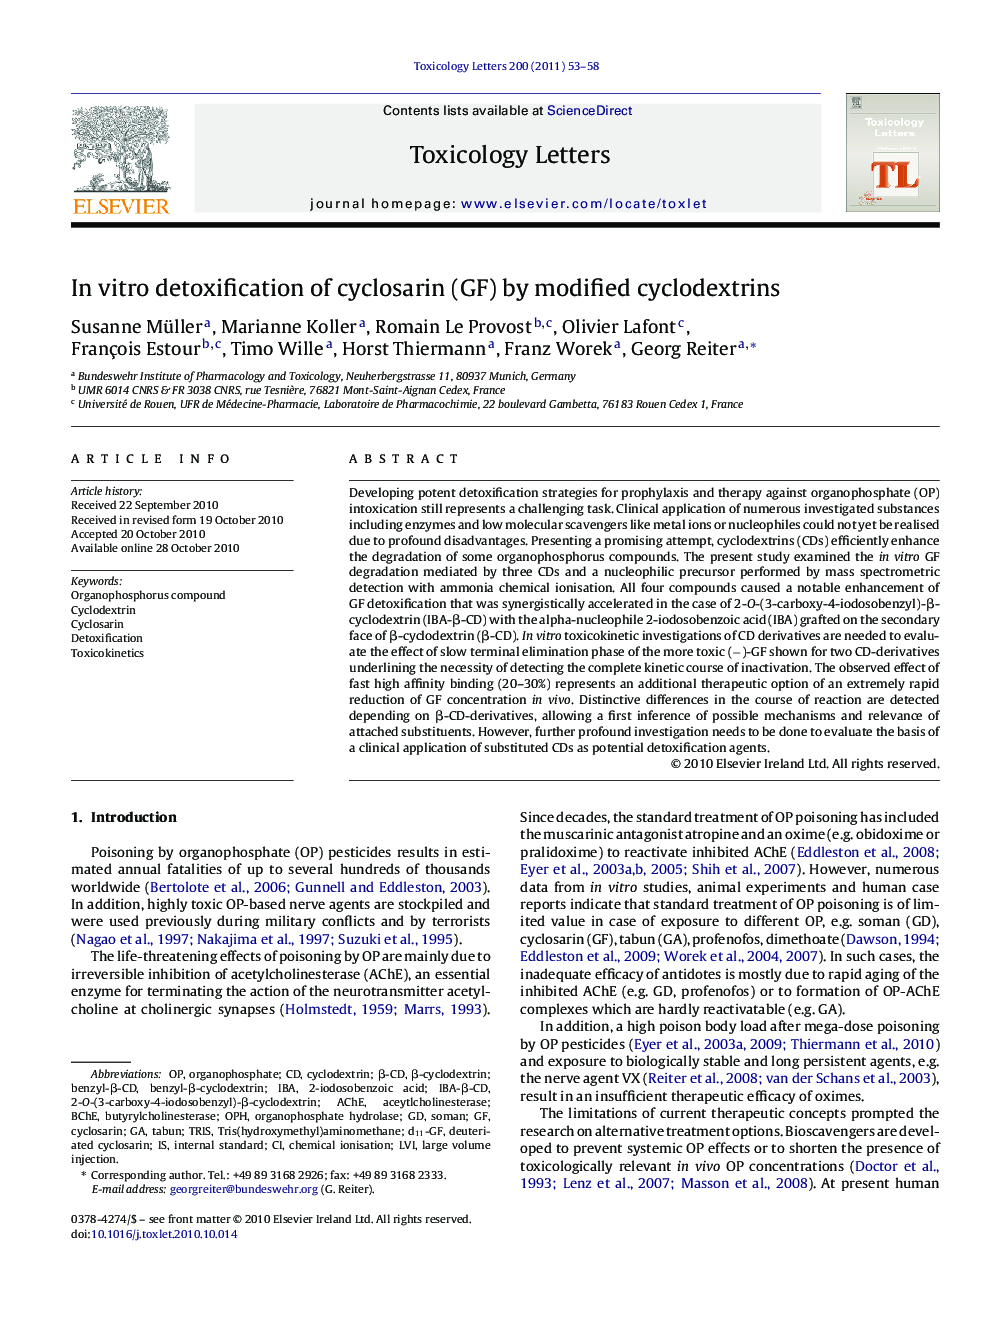 In vitro detoxification of cyclosarin (GF) by modified cyclodextrins